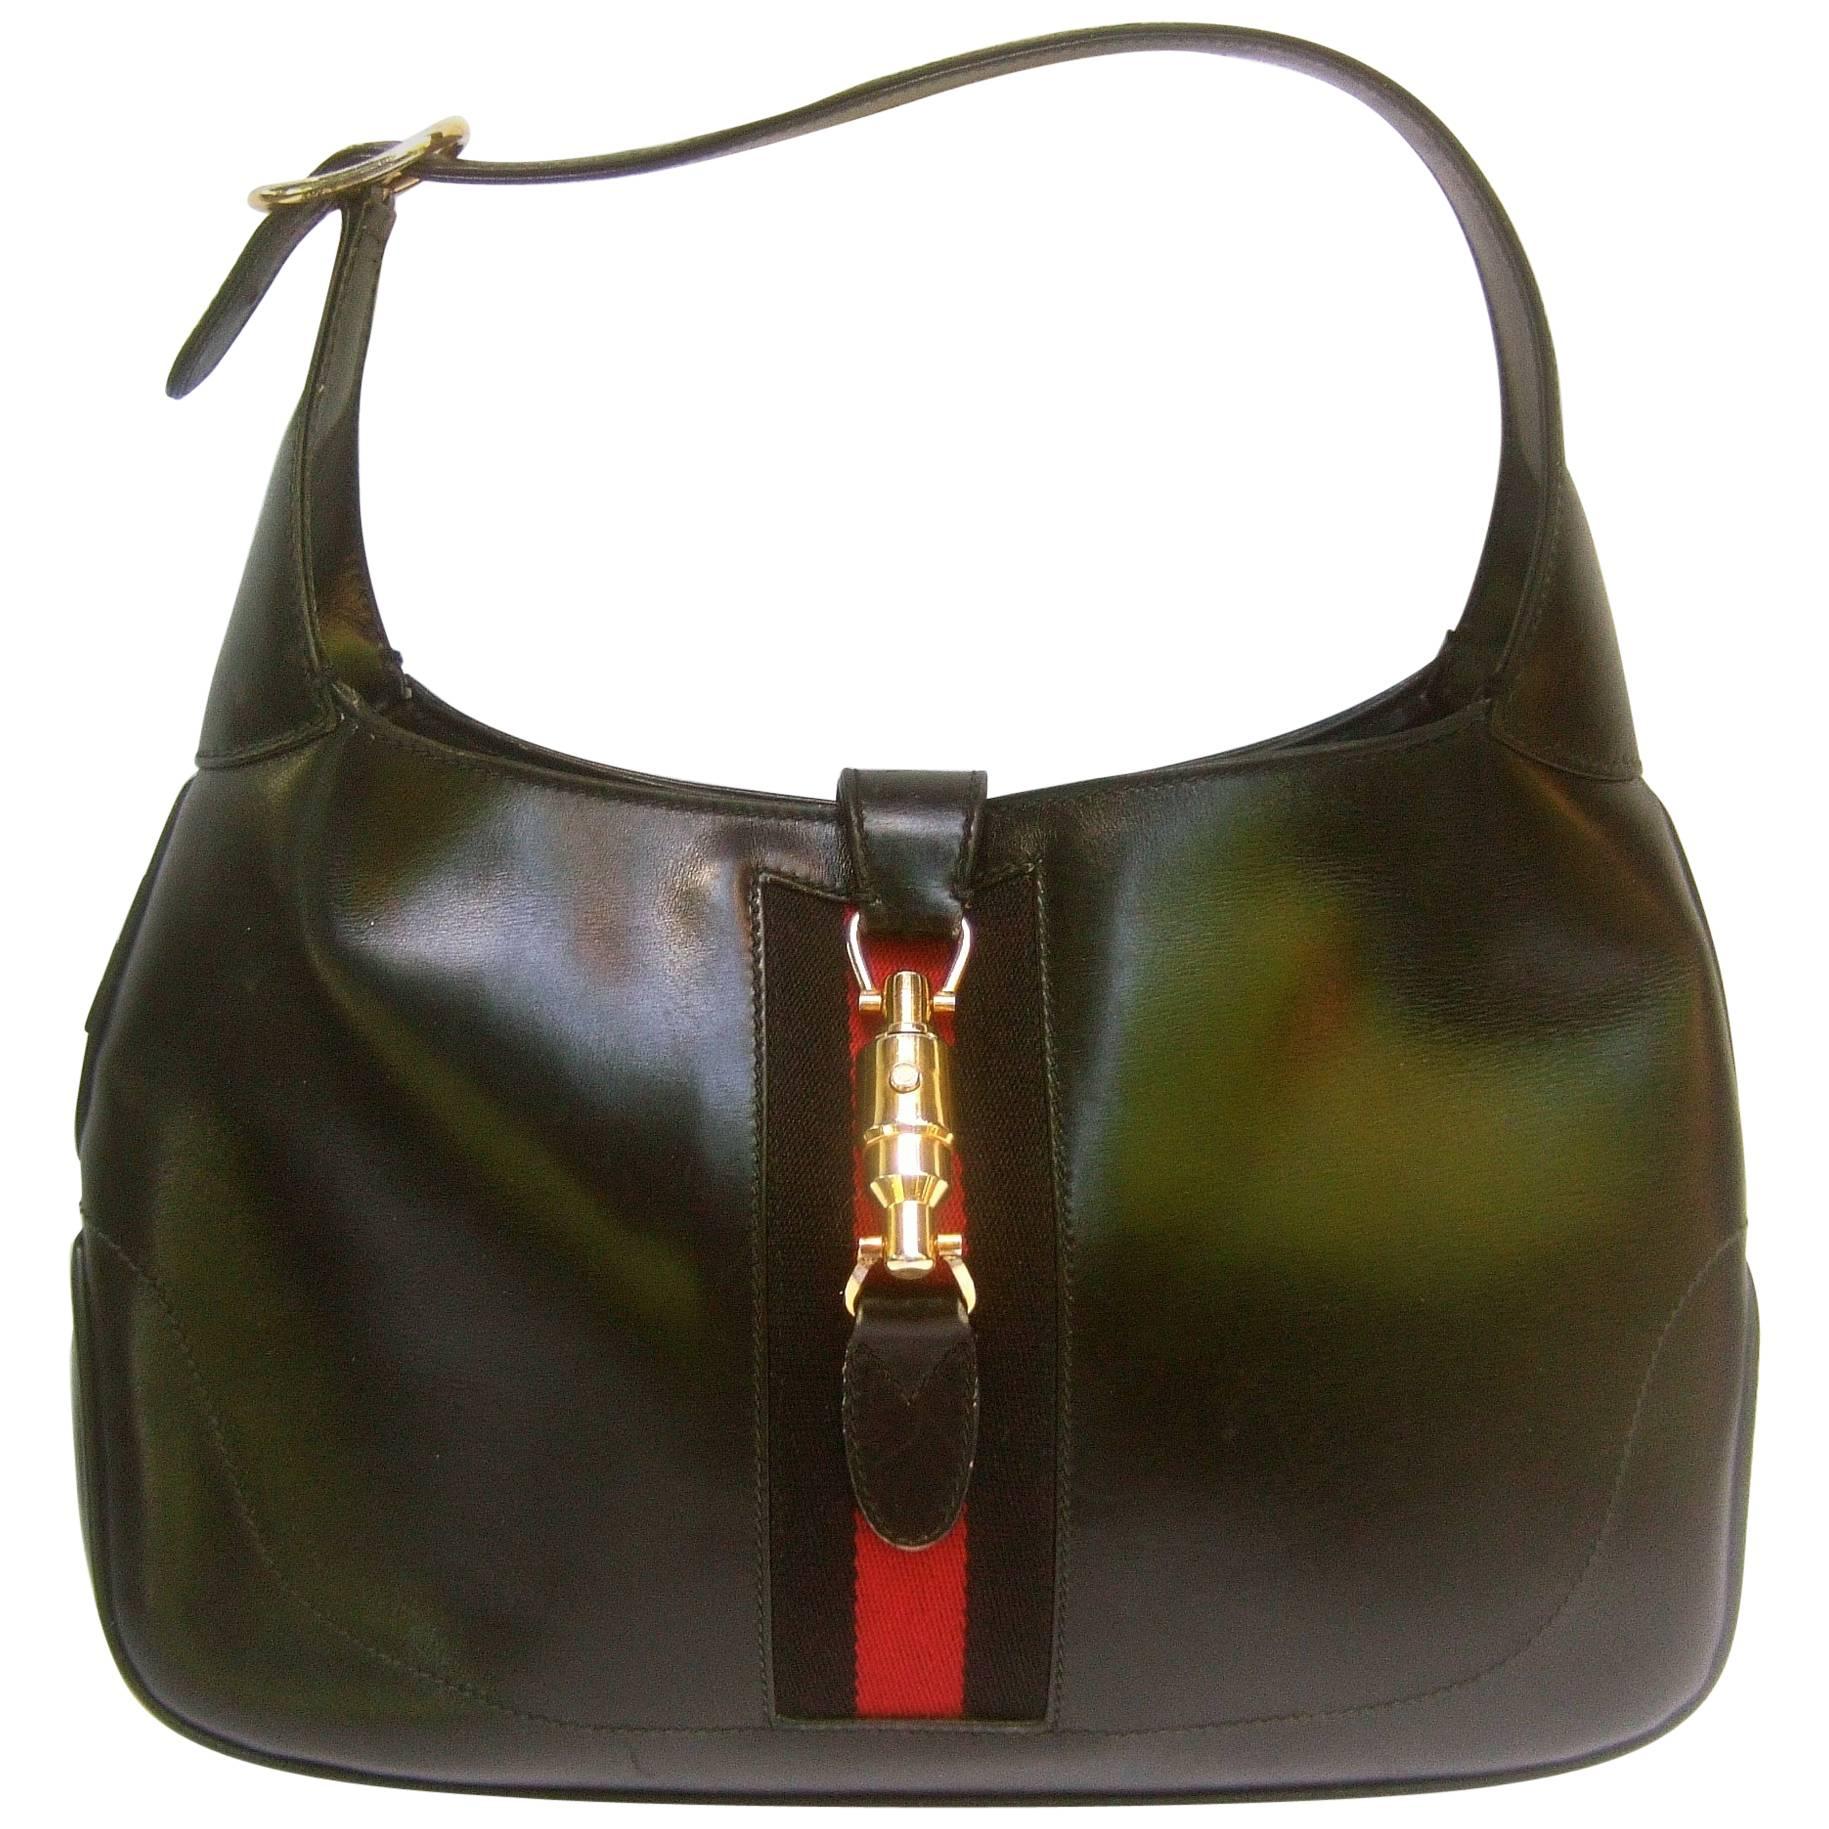 Gucci Italy Iconic Black Leather Piston Jackie O Handbag ca 1970s